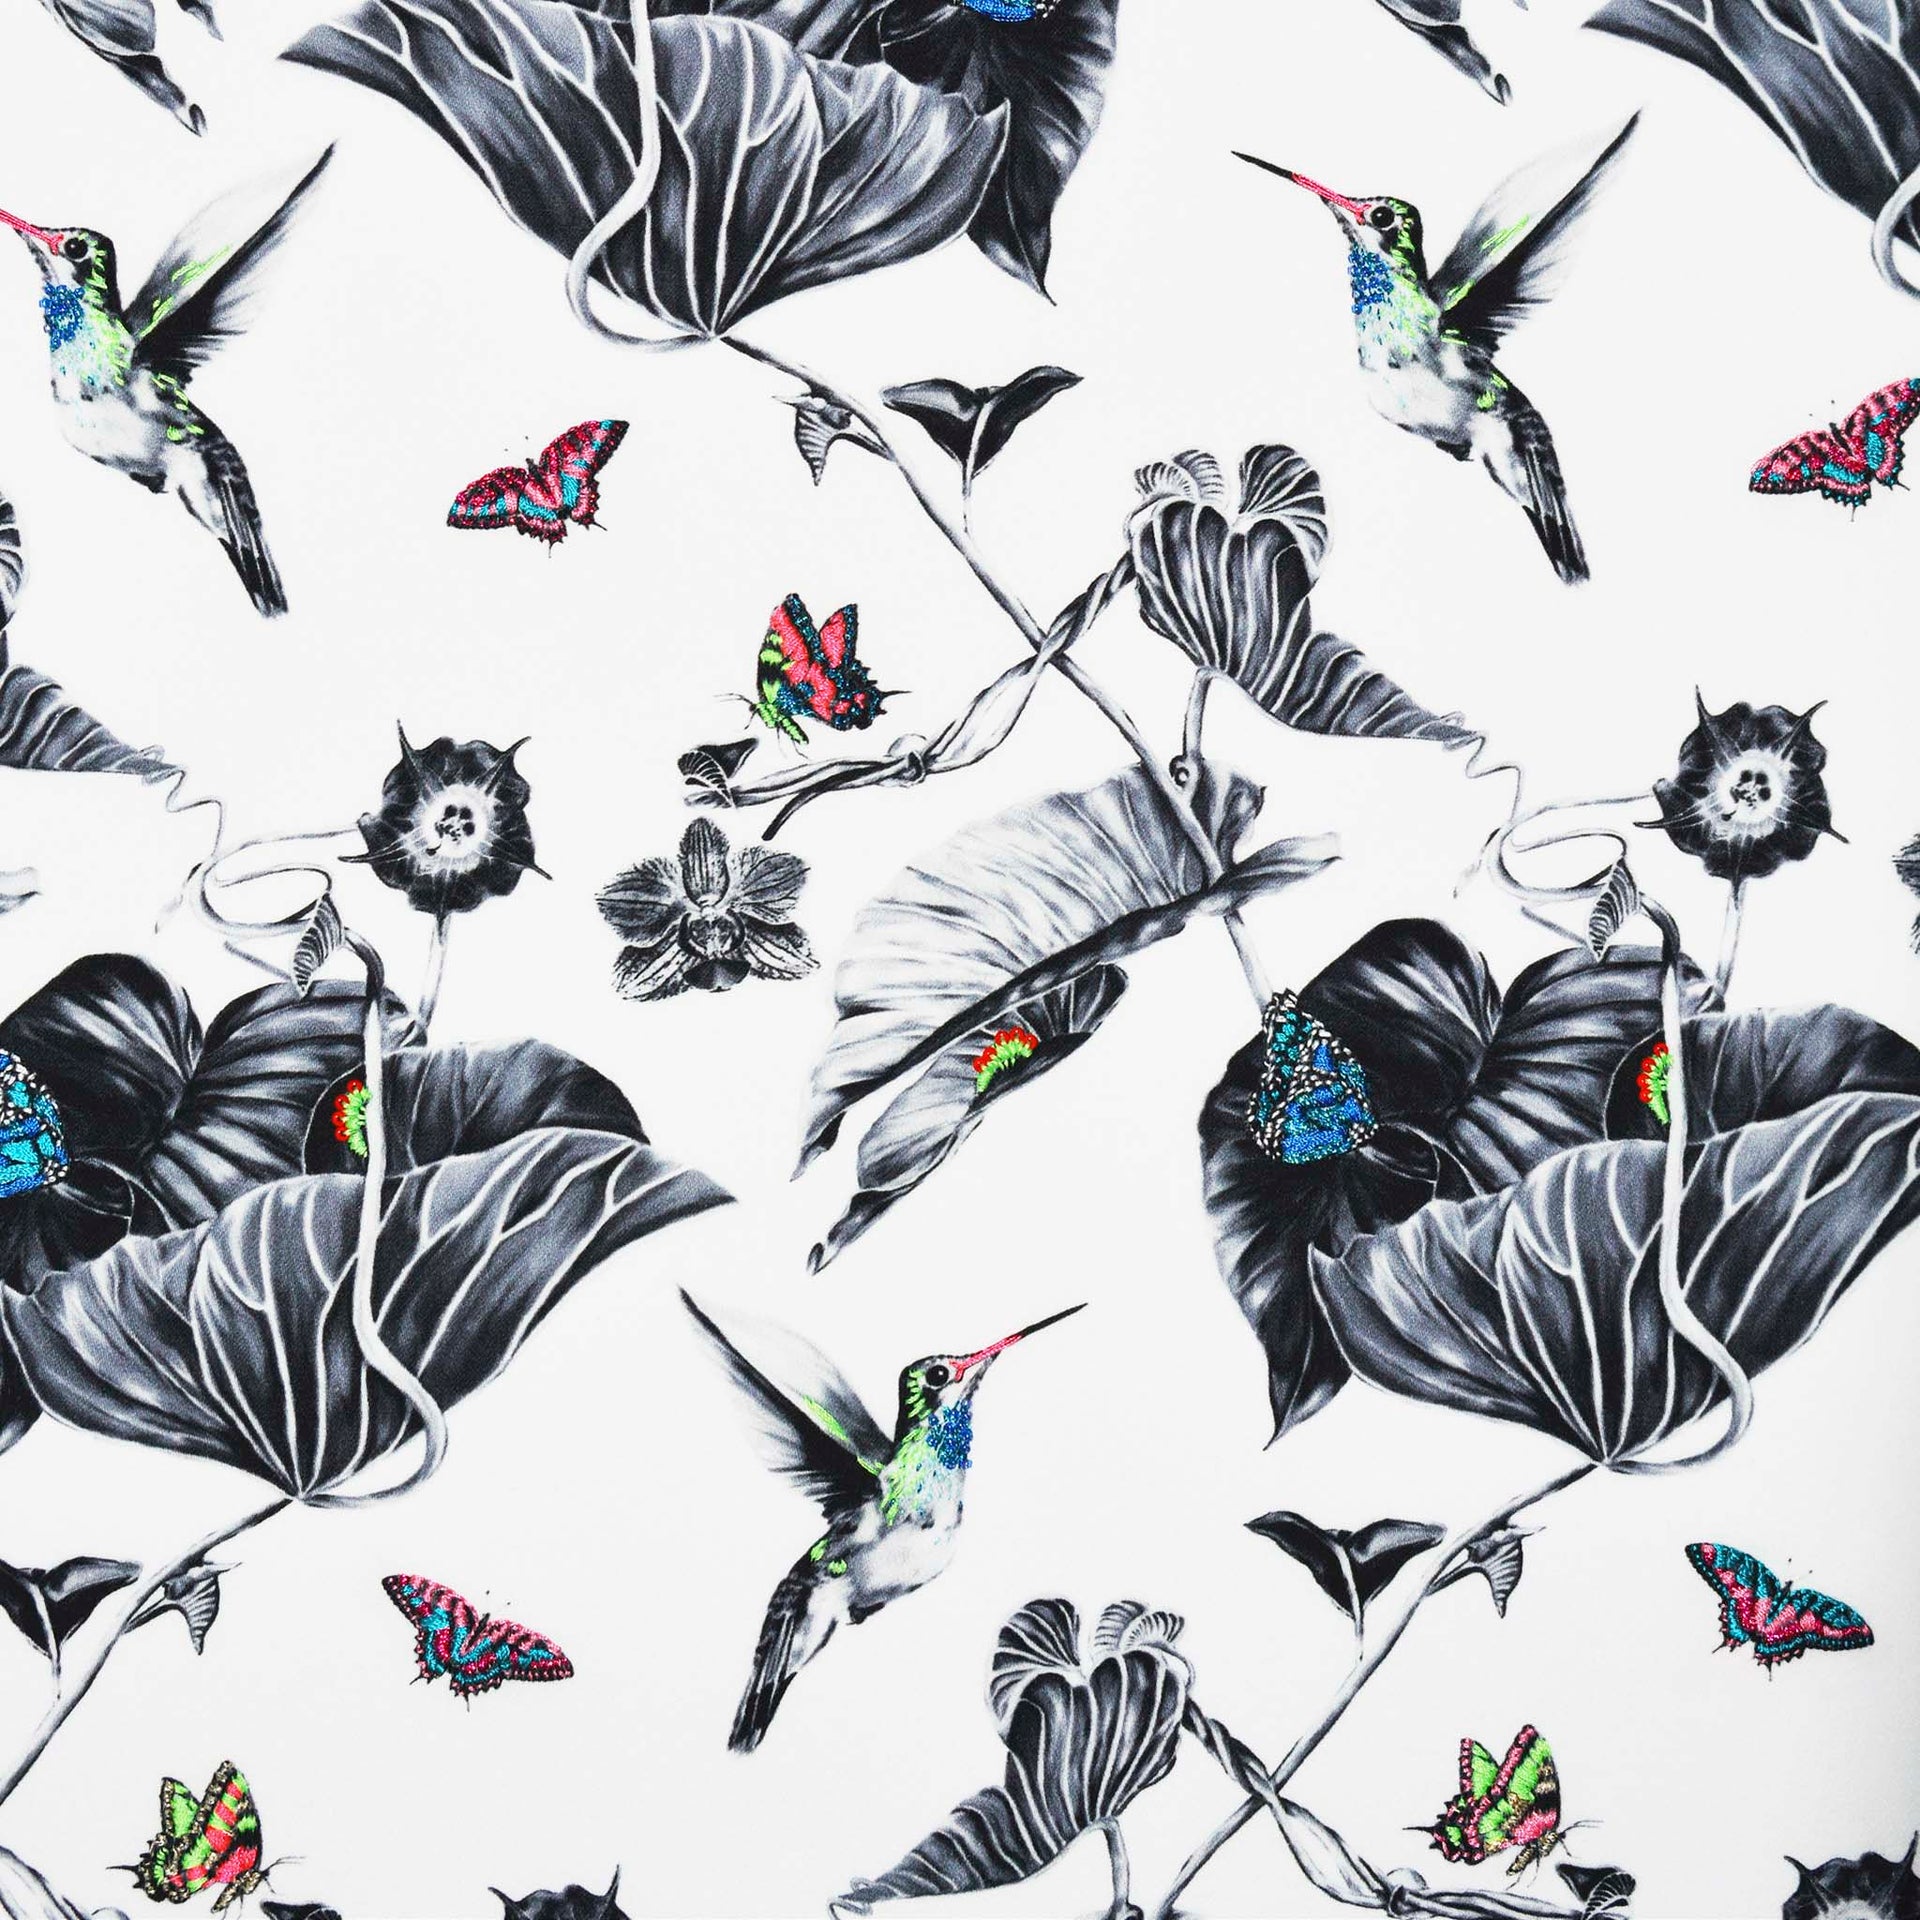 Hummingbird hand embroidered artwork